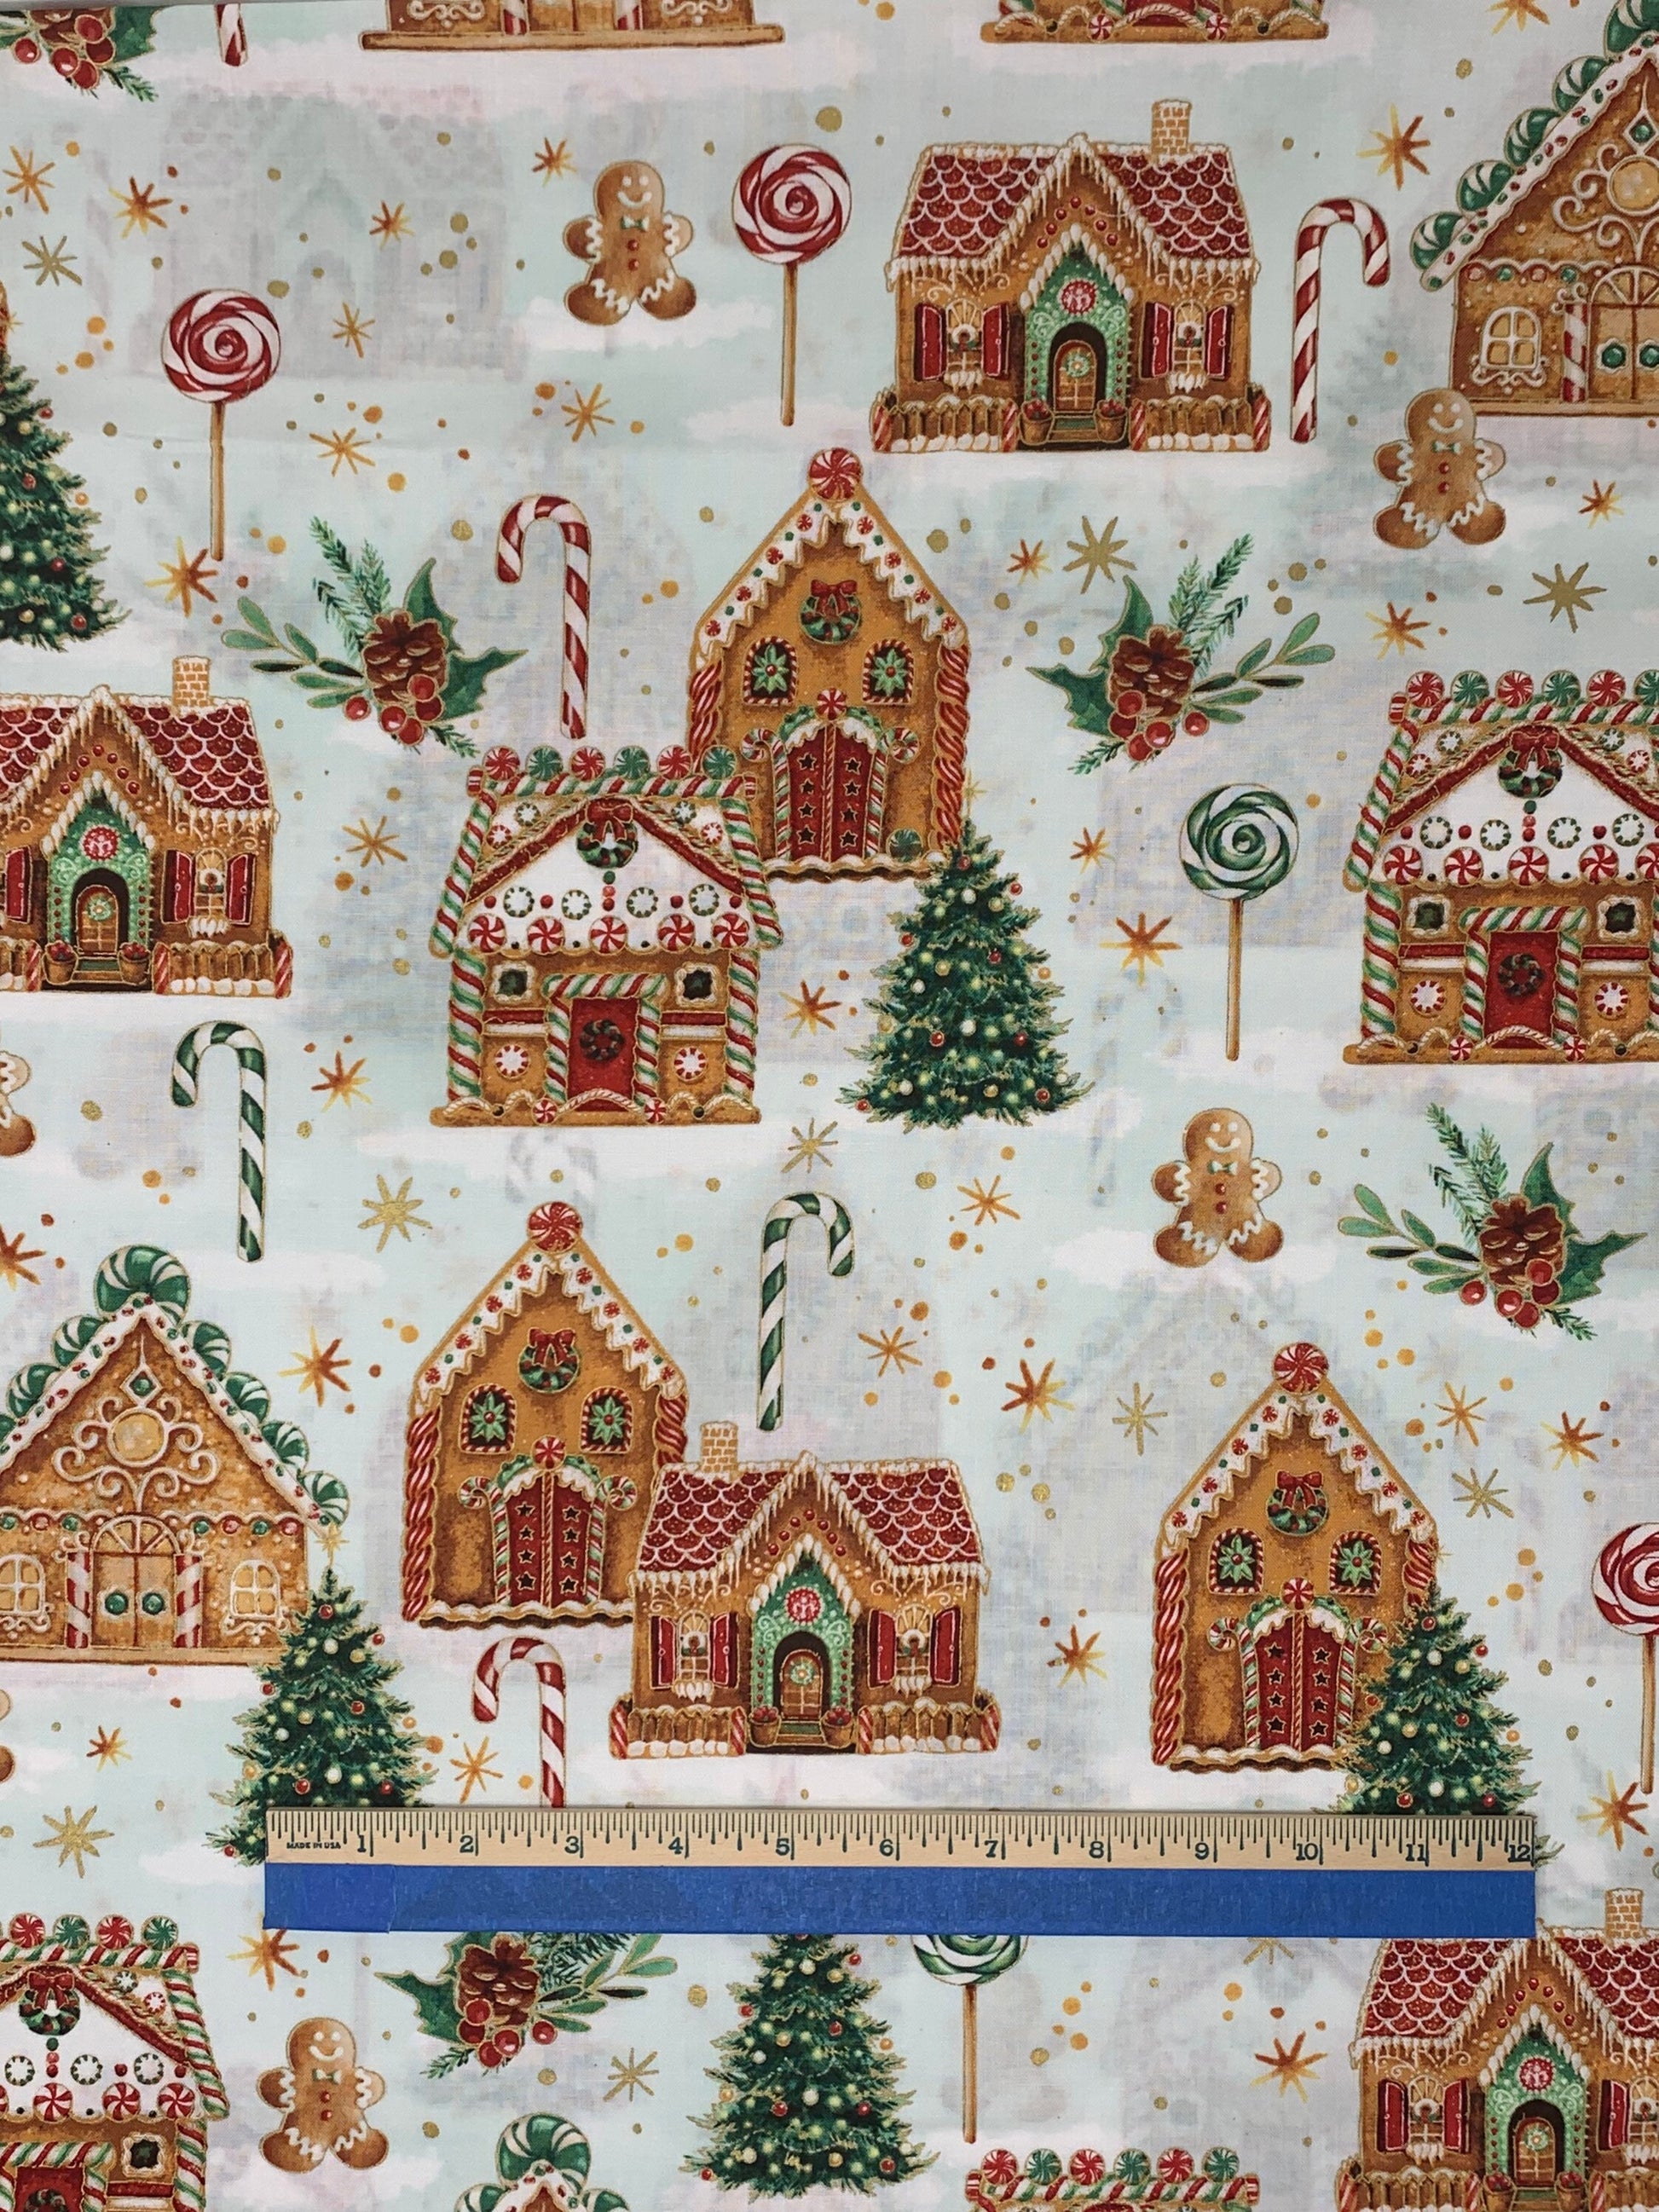 Christmas fabric, Gingerbread House Yardage, Trees, Holiday Sweets, Mint Green, Gold, Hoffman Fabric, Christmas yardage